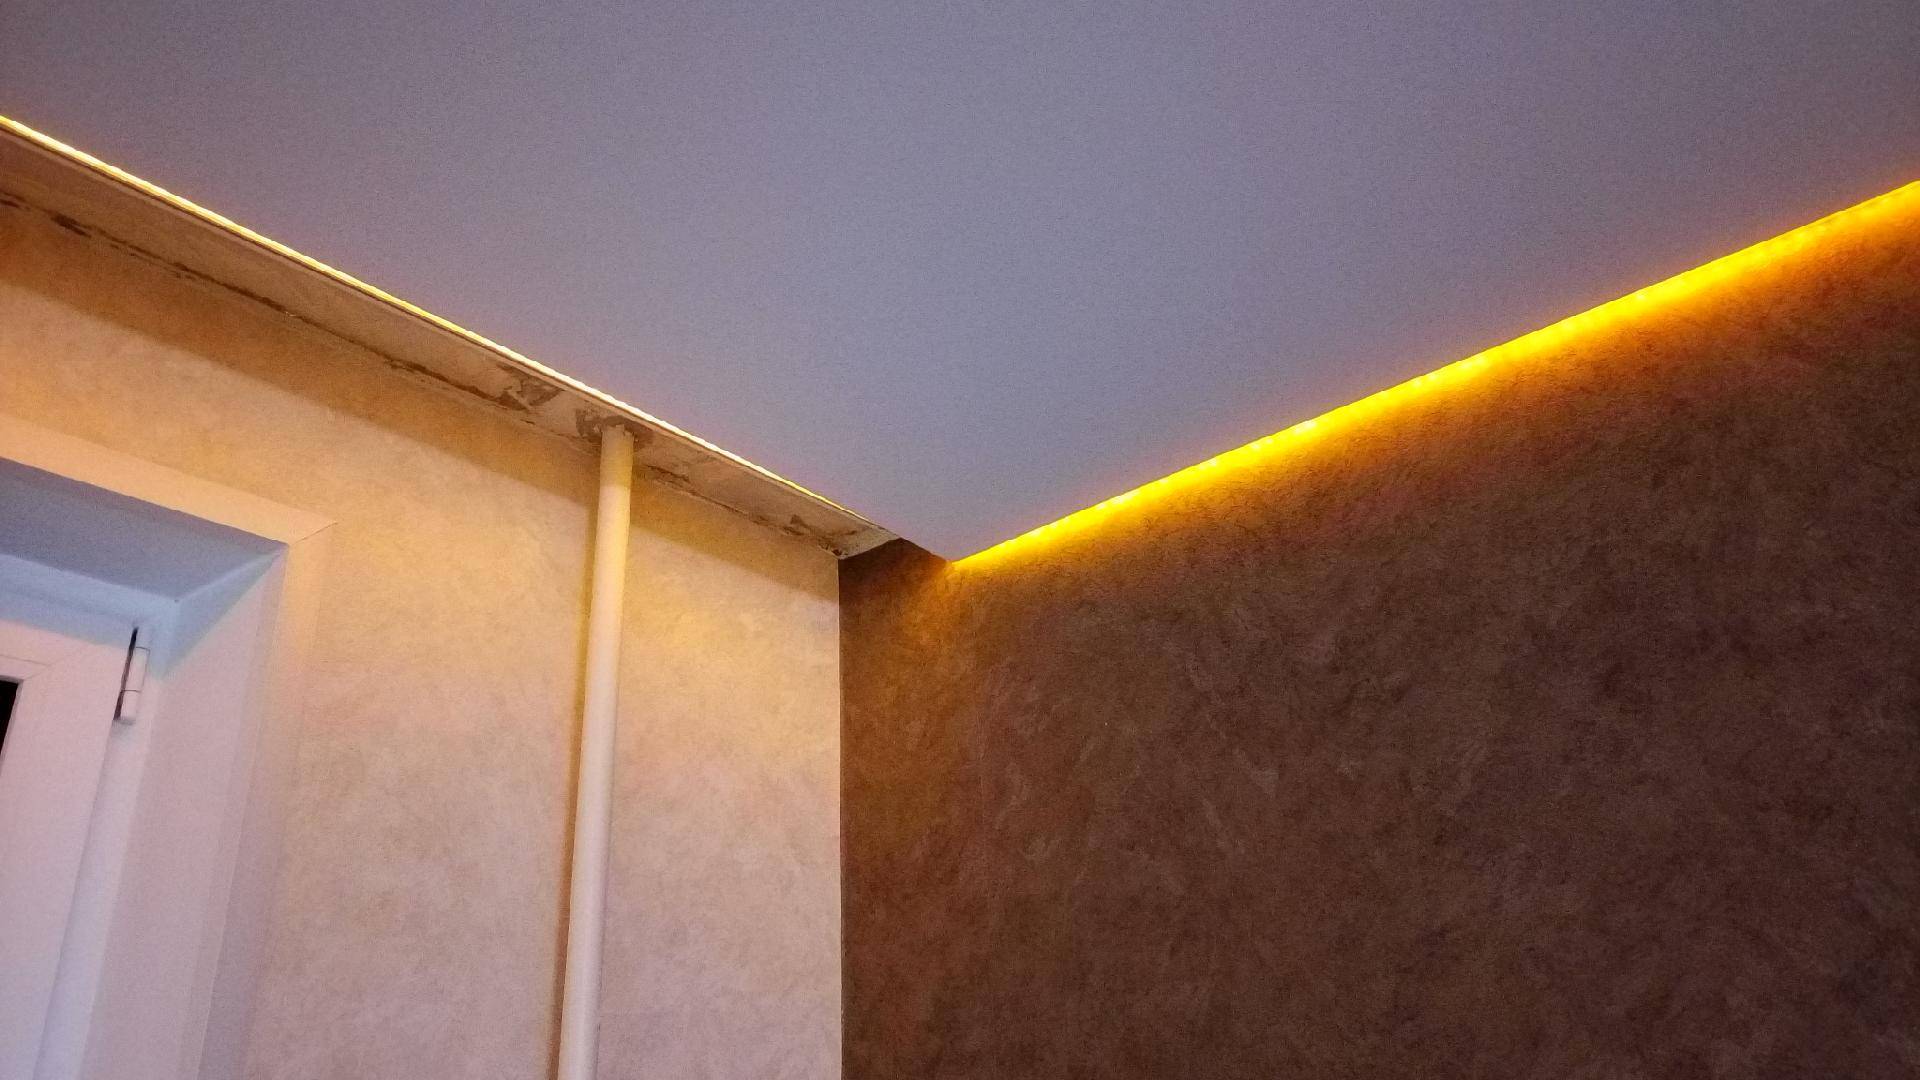 монтаж карниза для подсветки потолка